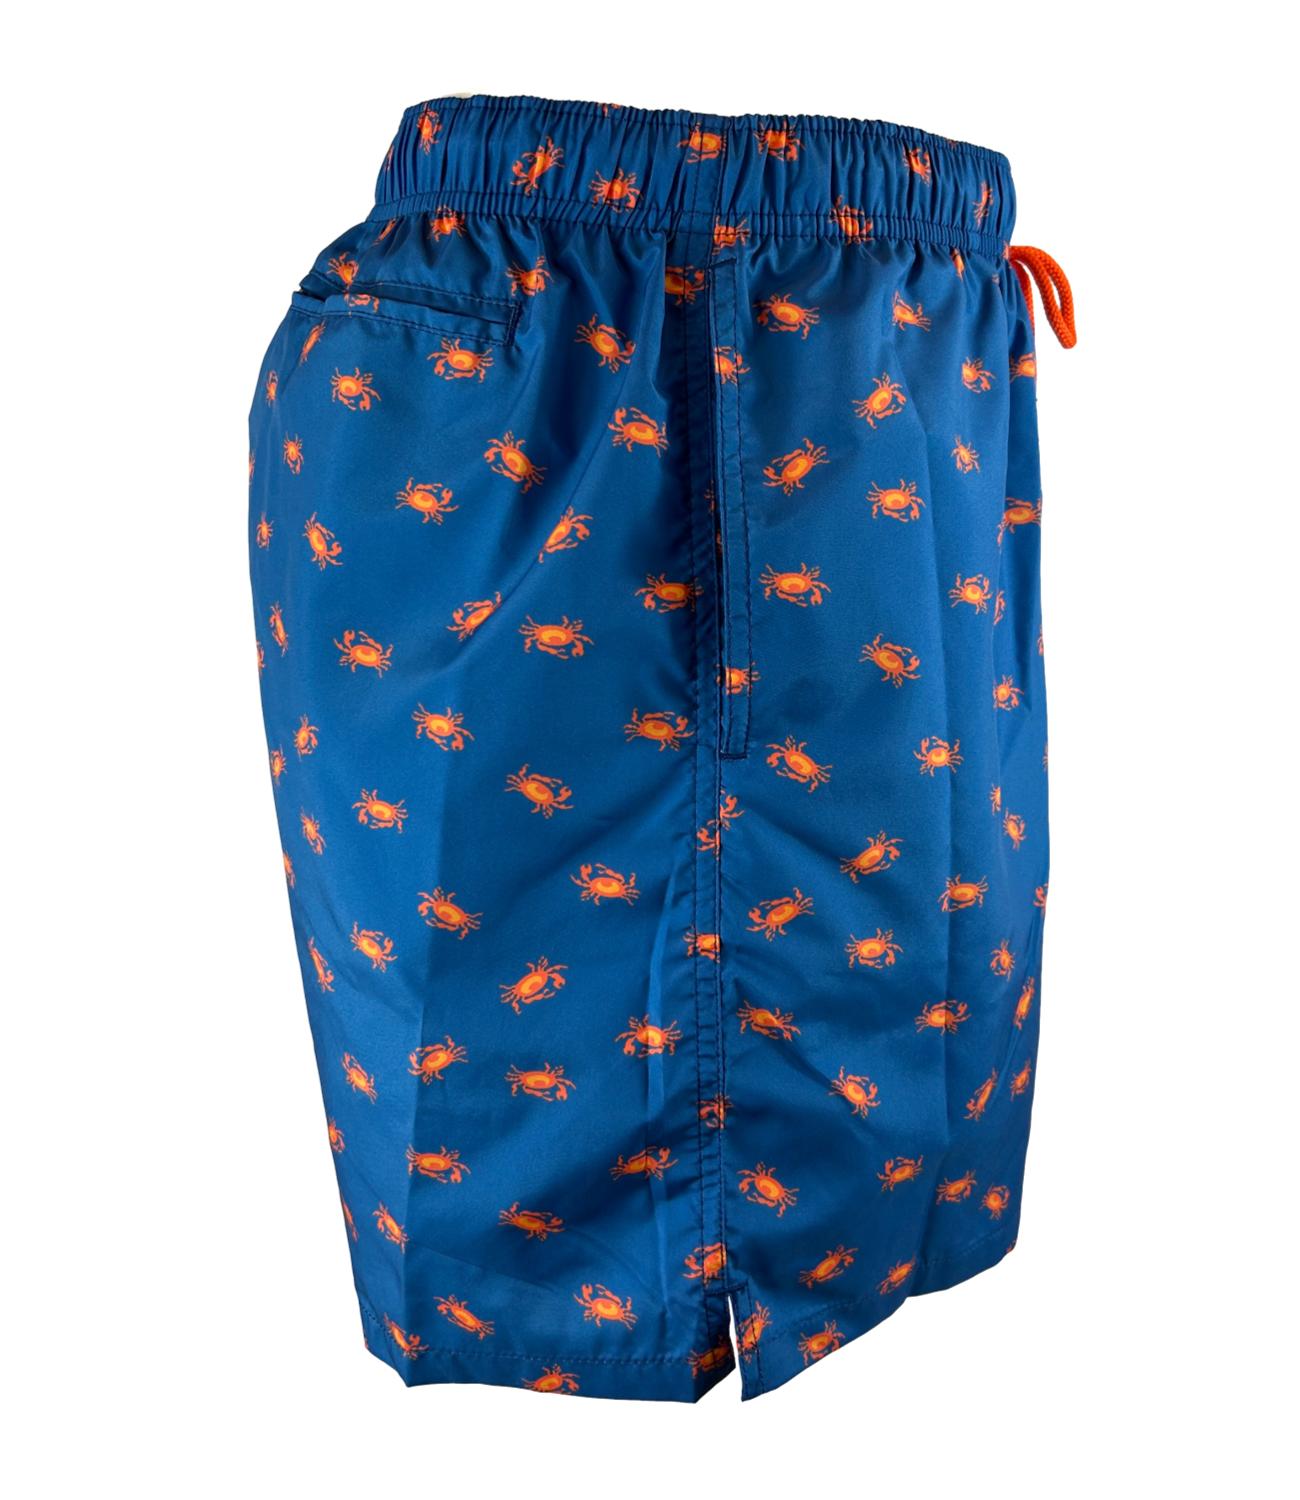 GALLO Men's Blue Costume with orange crab pattern